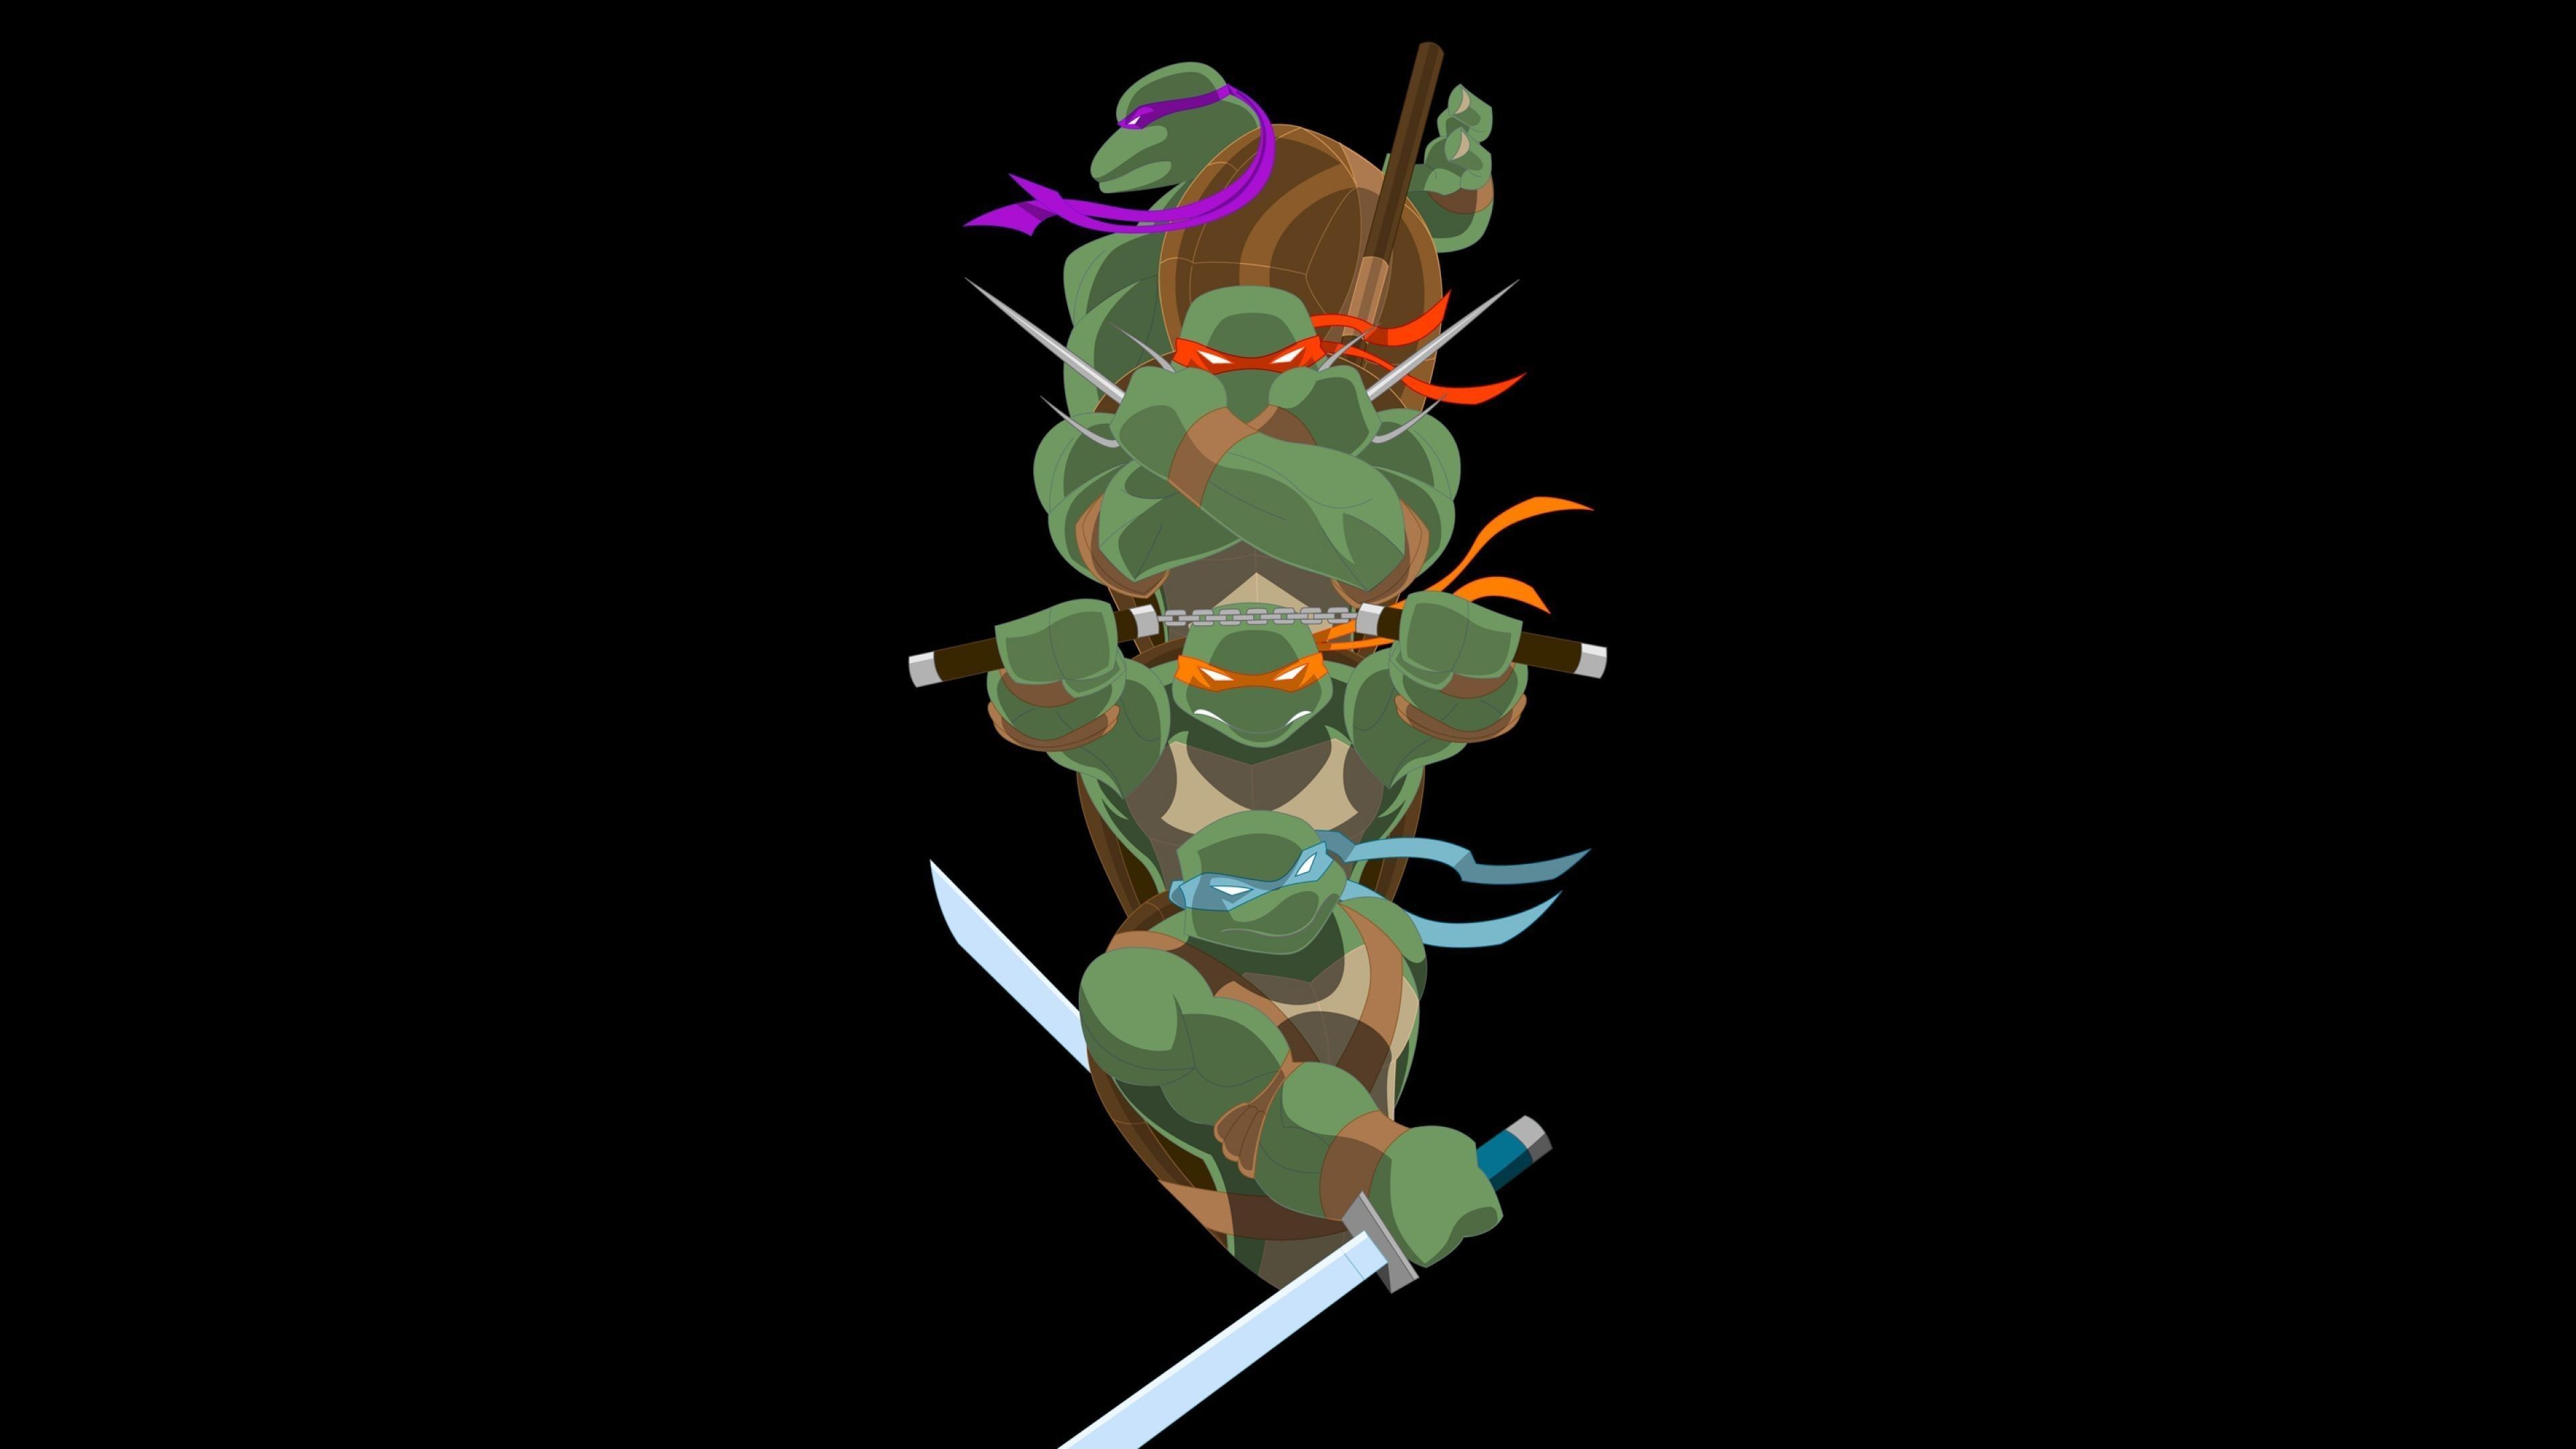 Teenage Mutant Ninja Turtles Wallpaper background picture